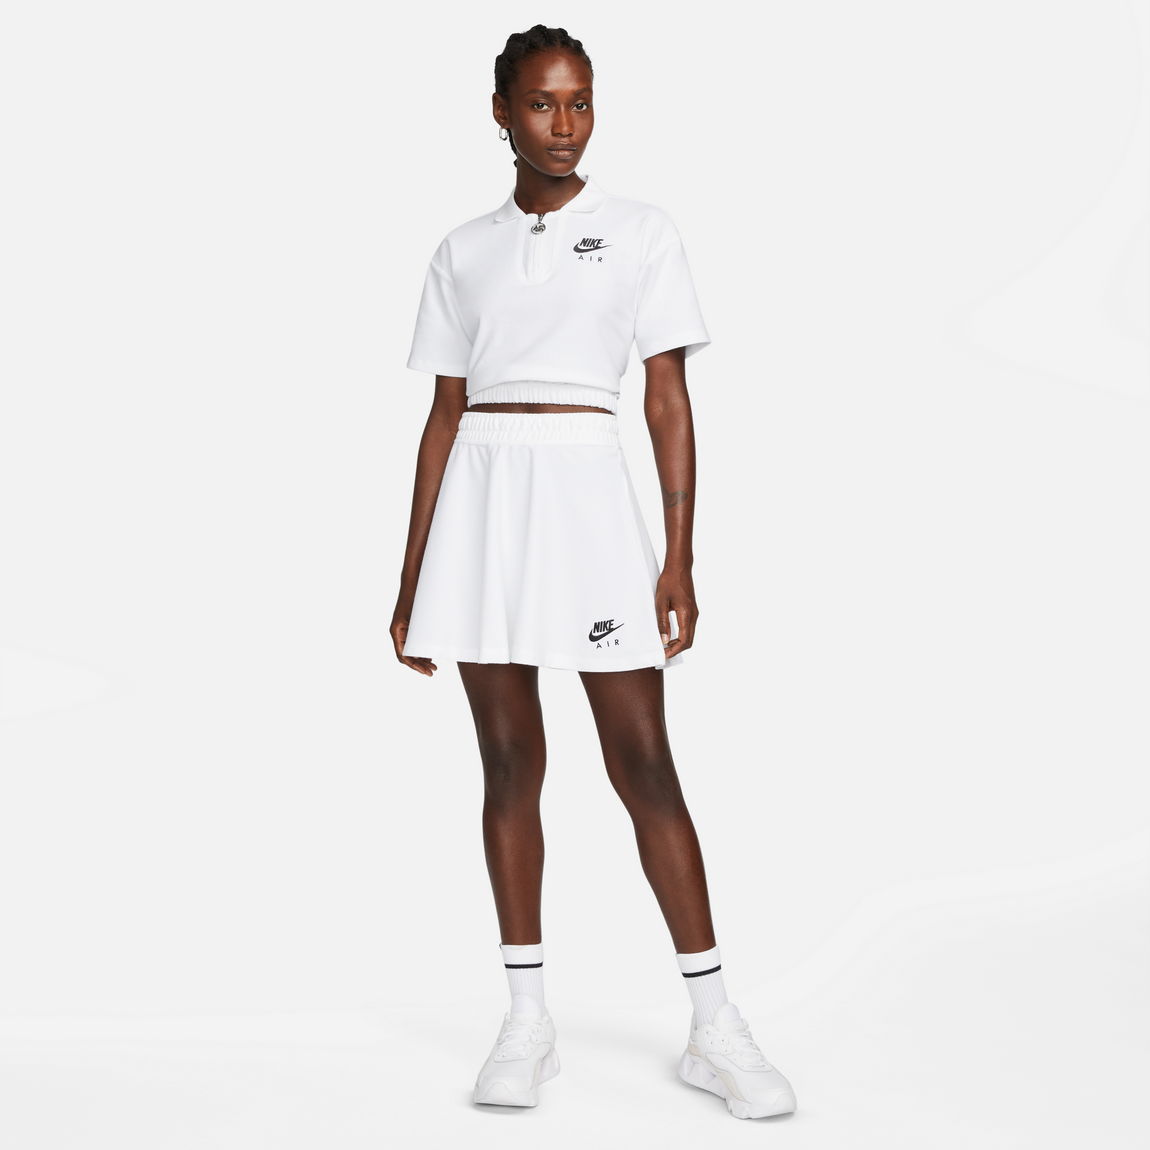 Nike Air Women's Pique Skirt (White/Black) - Nike Air Women's Pique Skirt (White/Black) - 